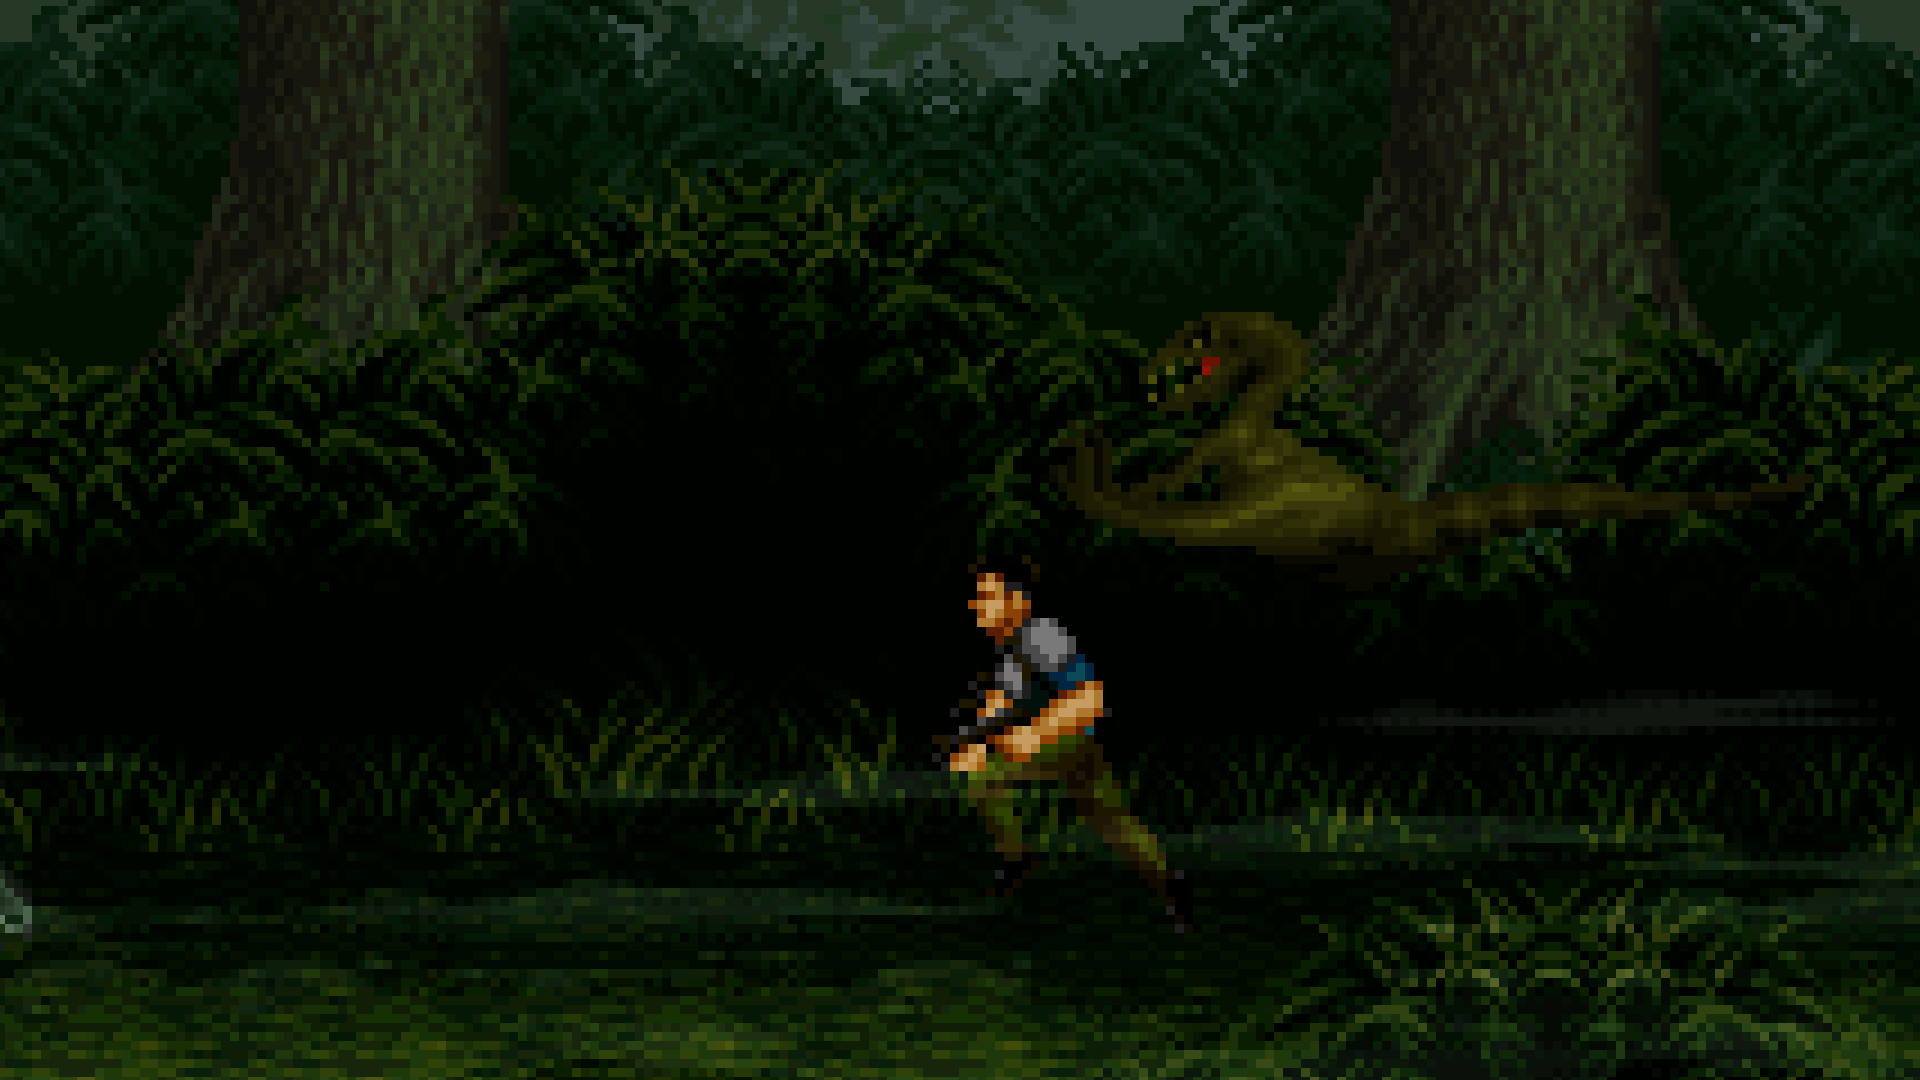 Jurassic Park Pt 2 16-BIT: Complete The Game